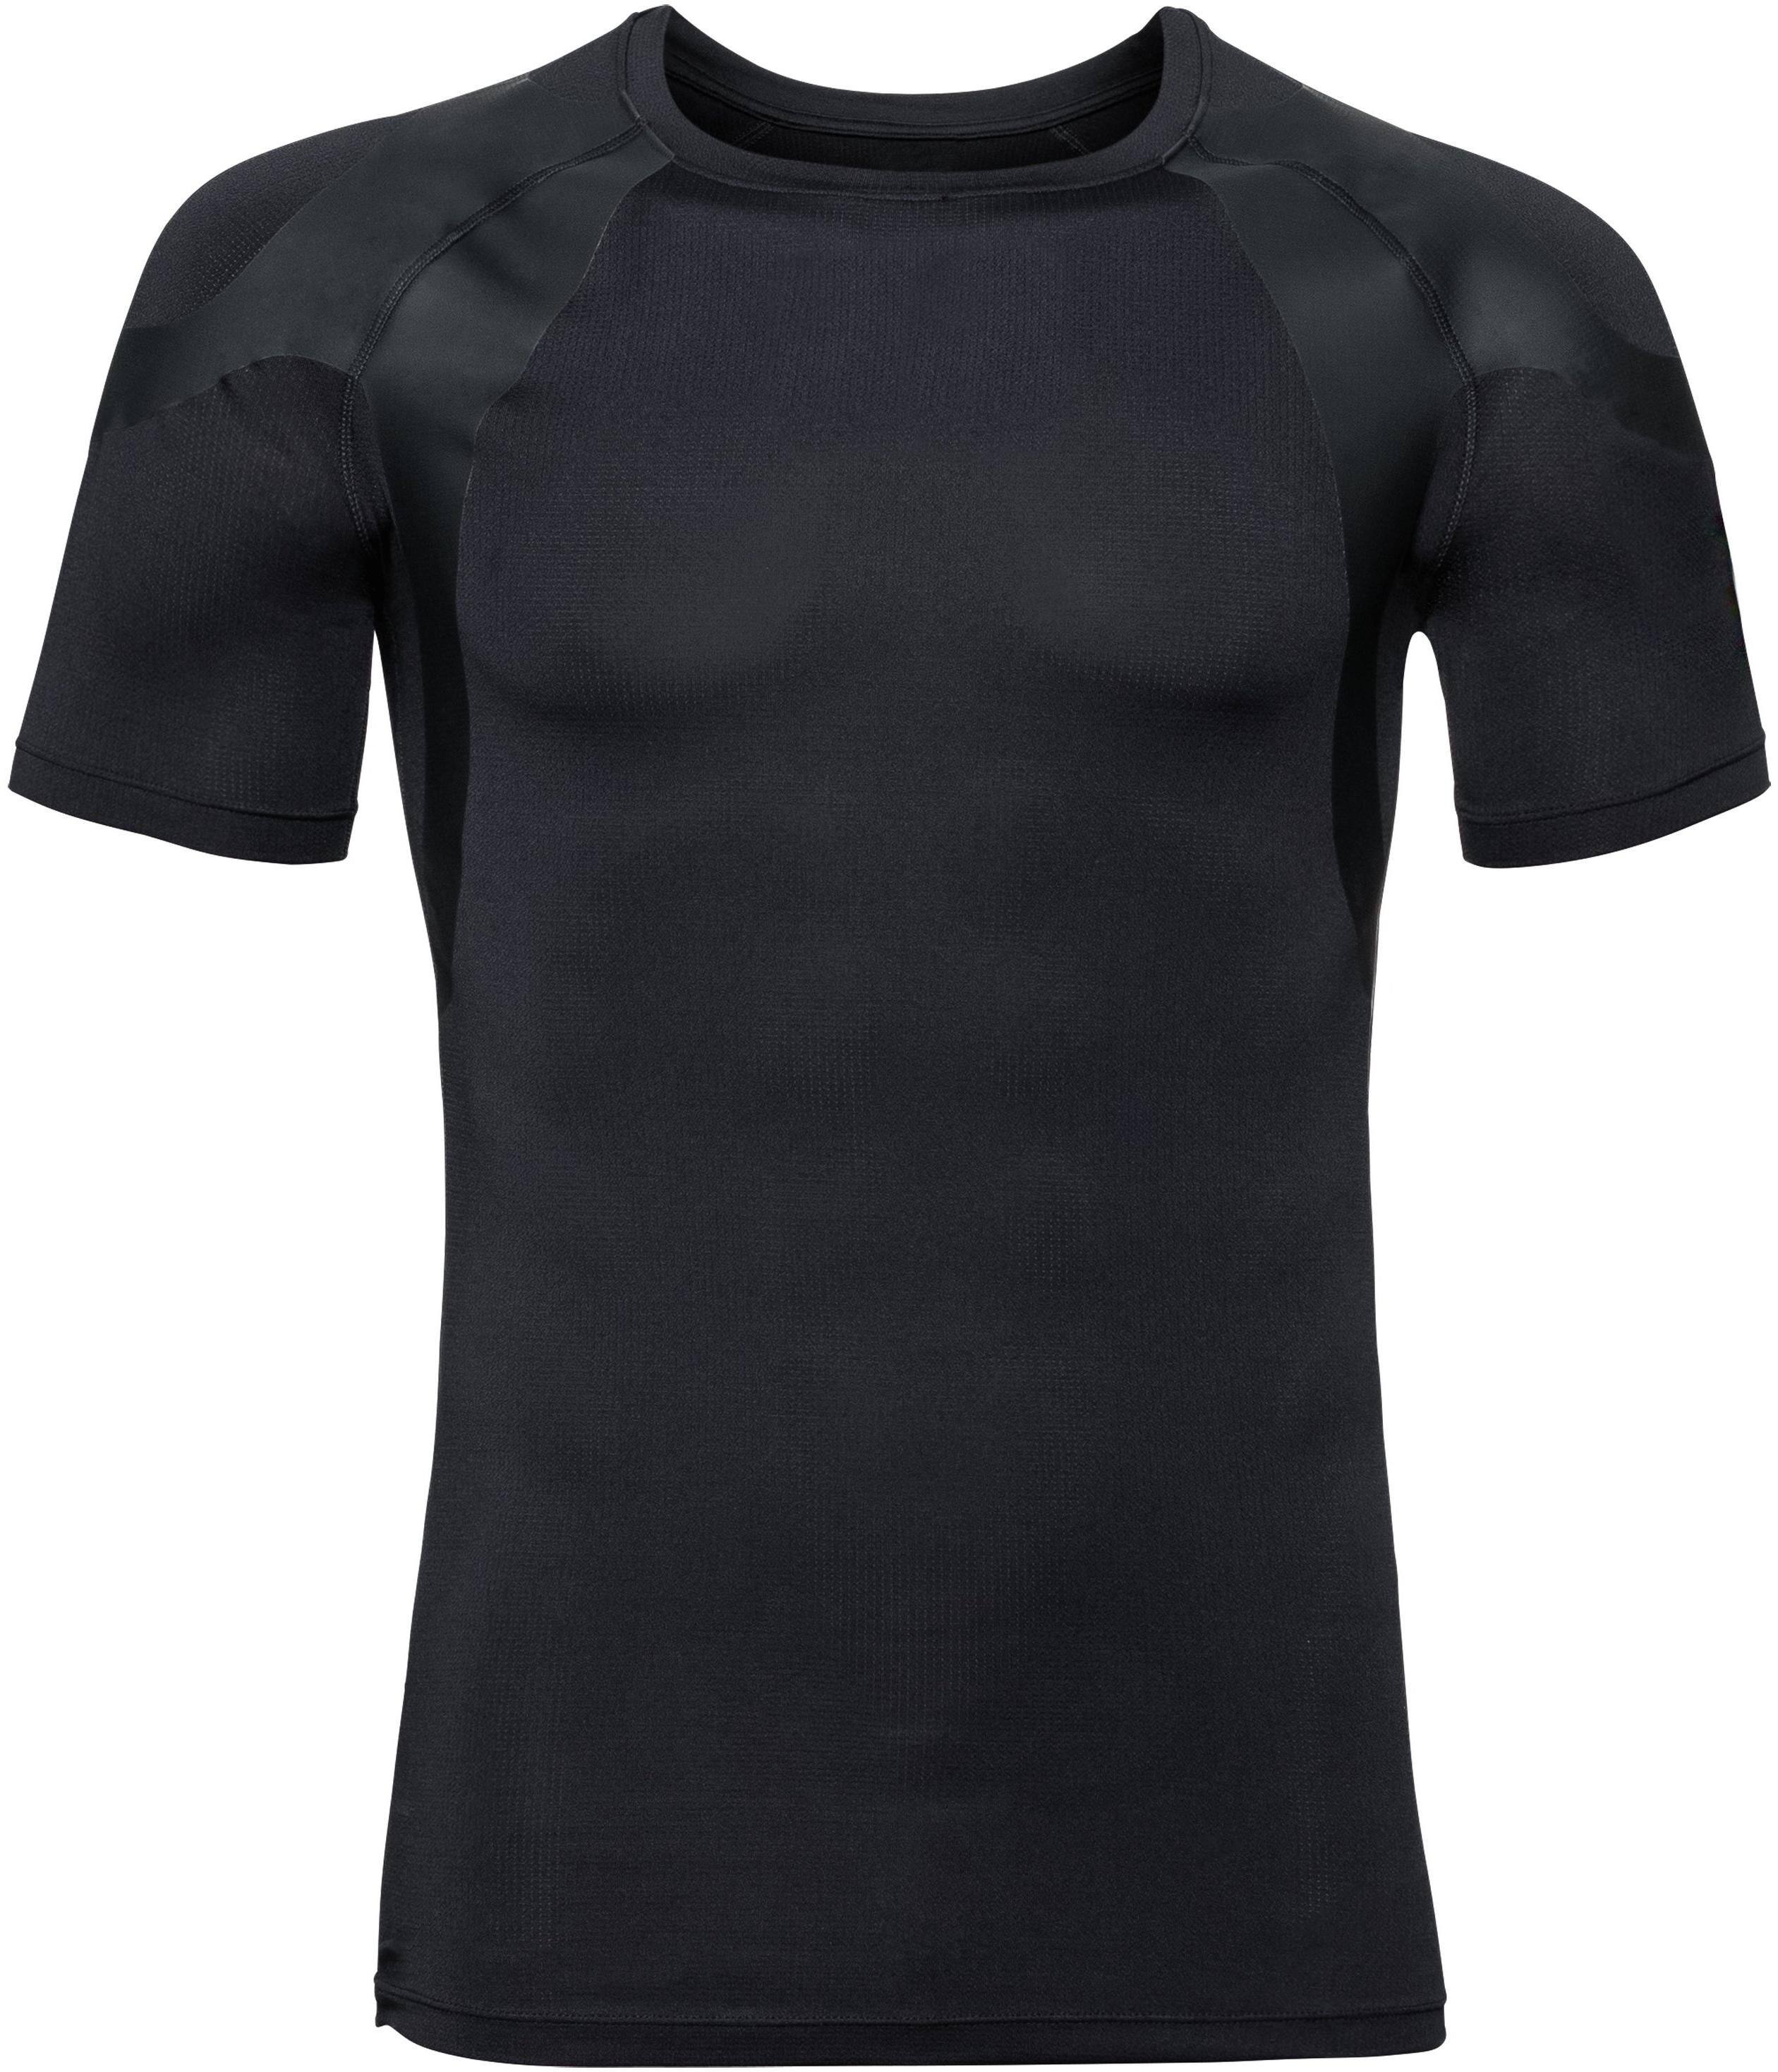 Men’s Active Spine Light Baselayer T-Shirt Black S